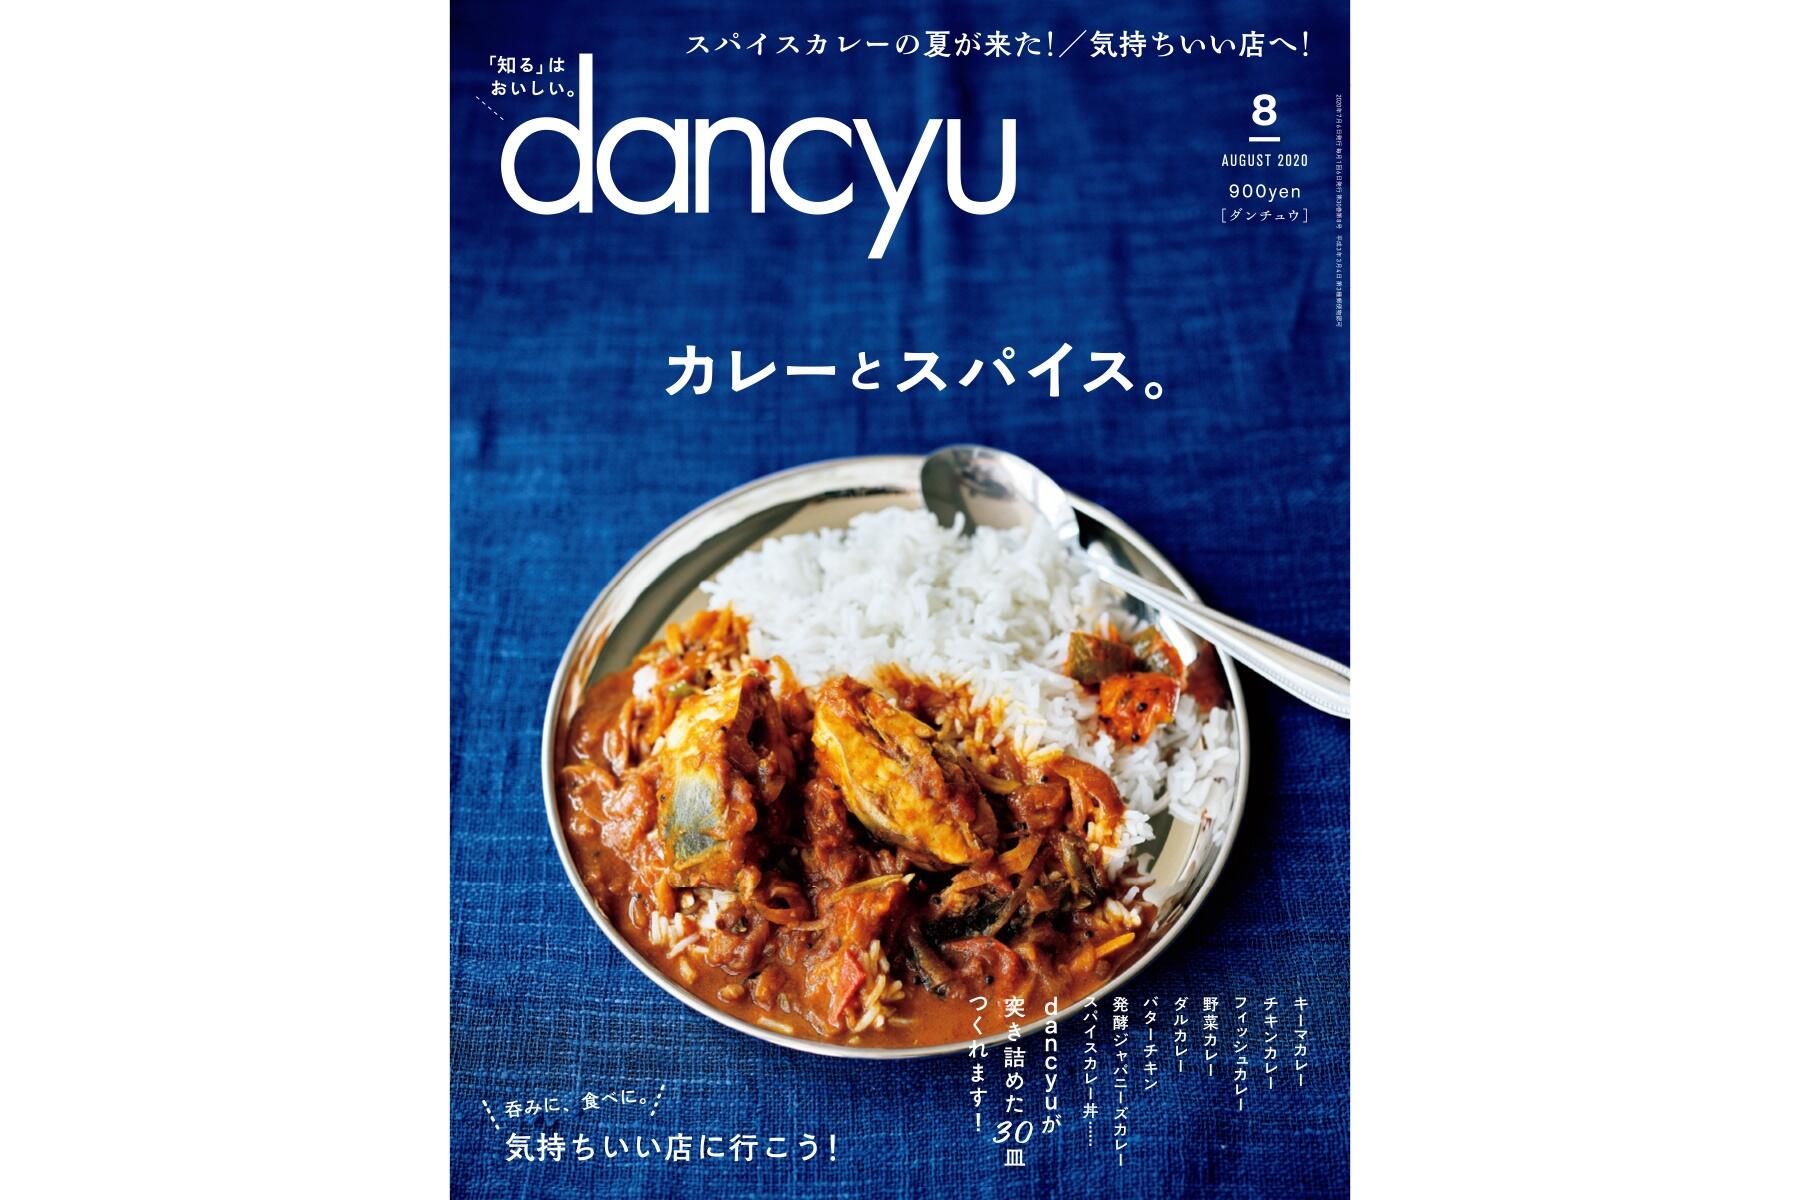 Dancyu8月号 カレーとスパイス 絶賛発売中 Dancyu本誌から 公式 Dancyu ダンチュウ